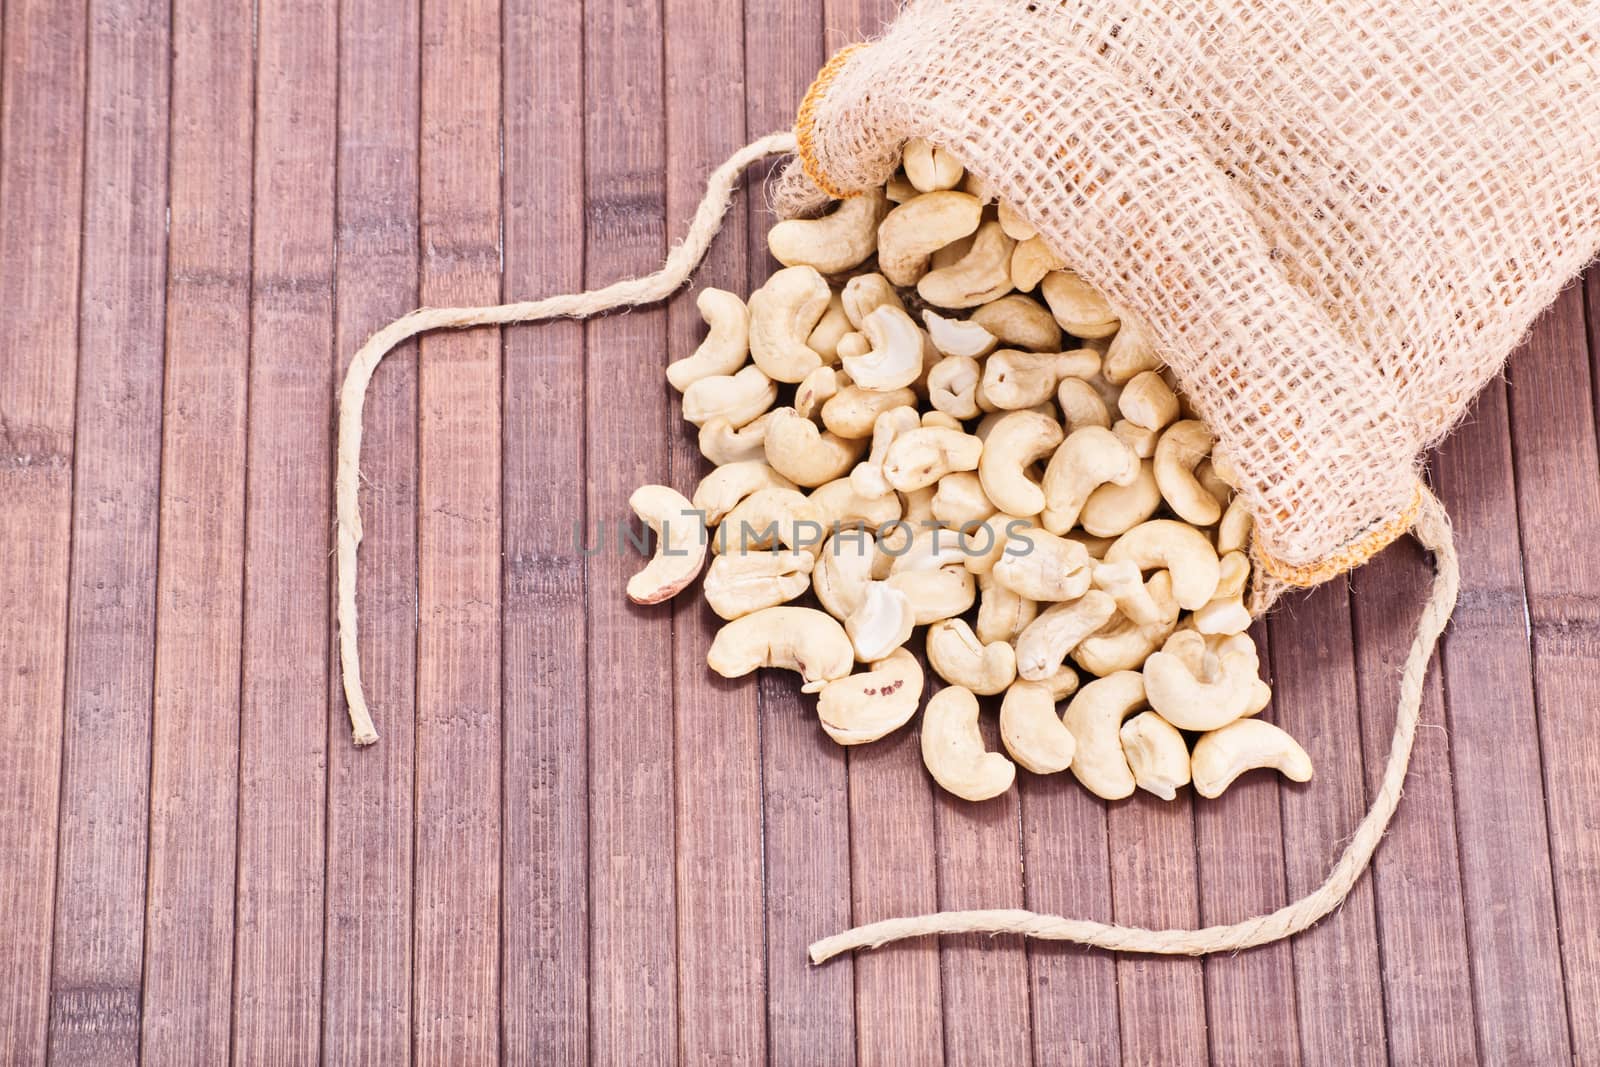 Spilled cashews on wooden background by Mendelex